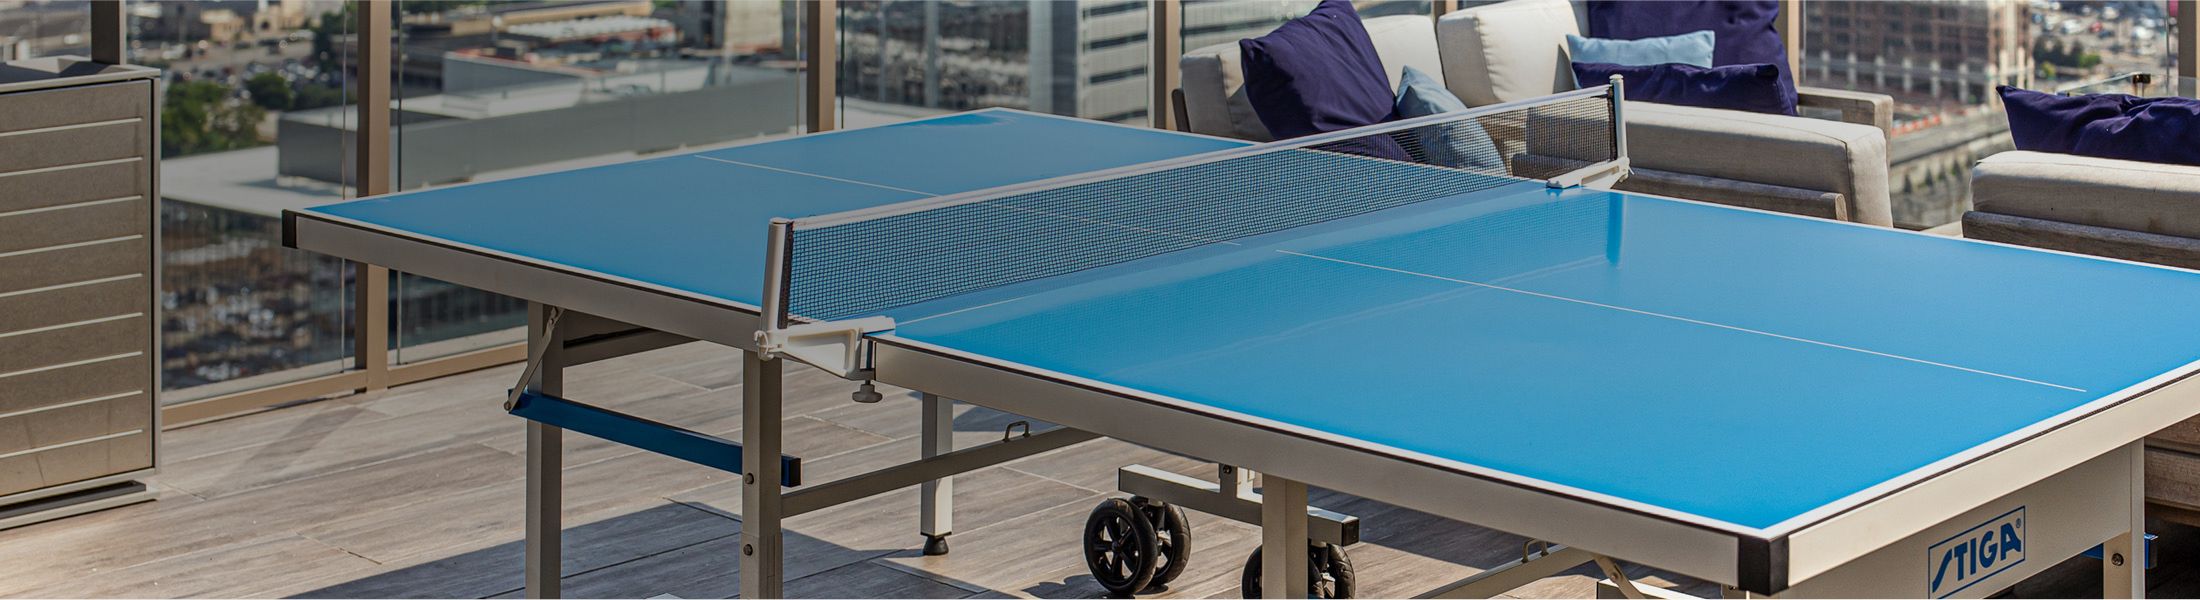 Mesa Ping Pong SMC Robusta Exterior outdoor Cubierta SMC Anclaje intemperie